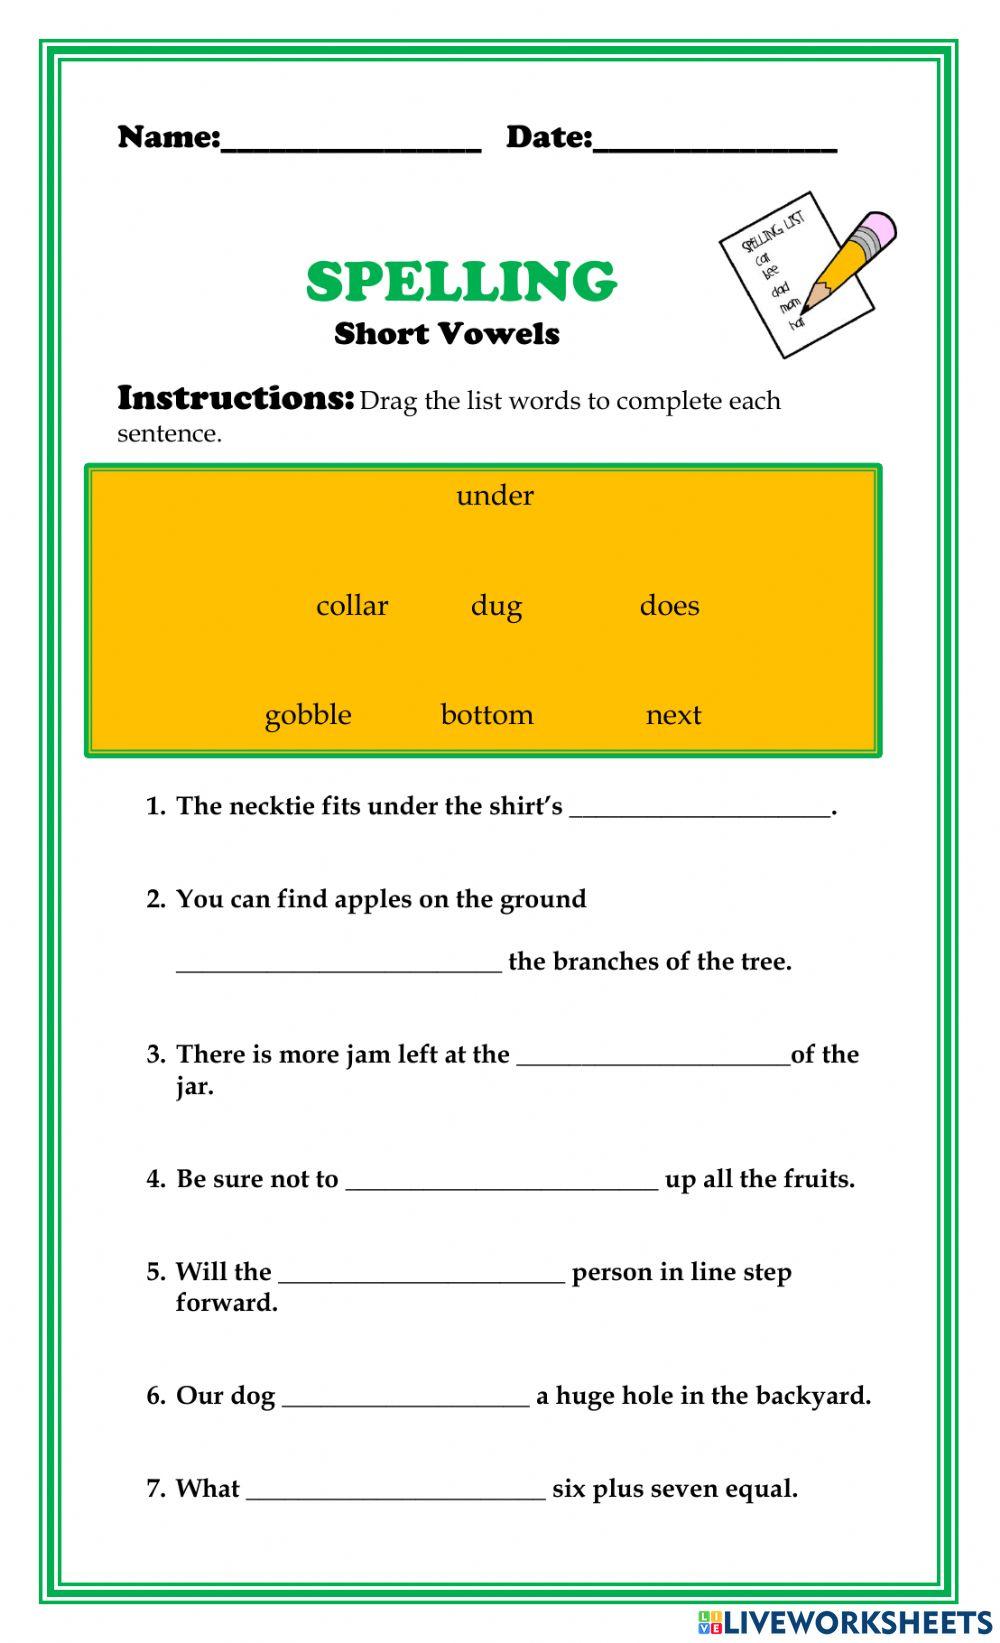 Spelling - Short Vowels